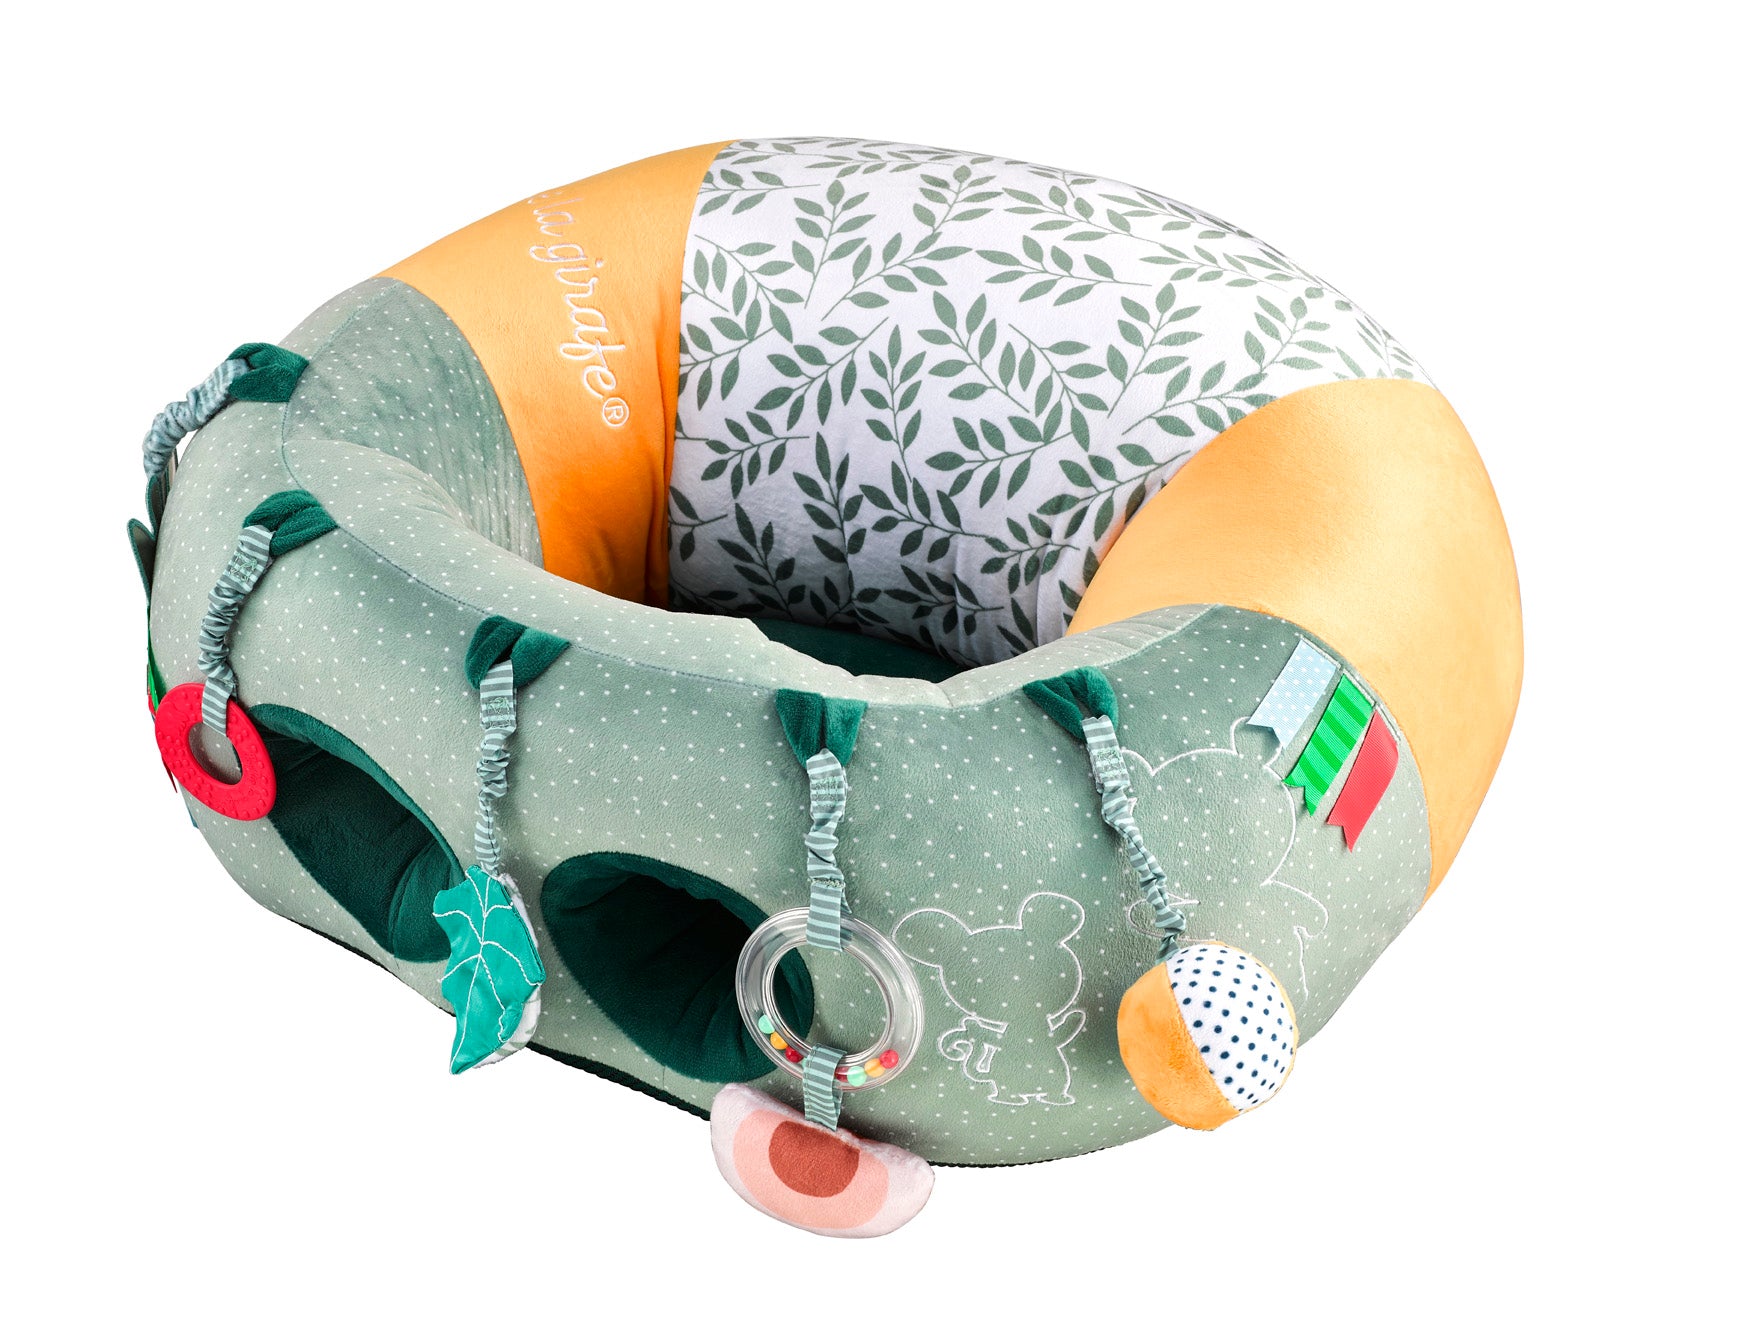 Baby Seat & Play - Sophie La Girafe – Calisson Toys